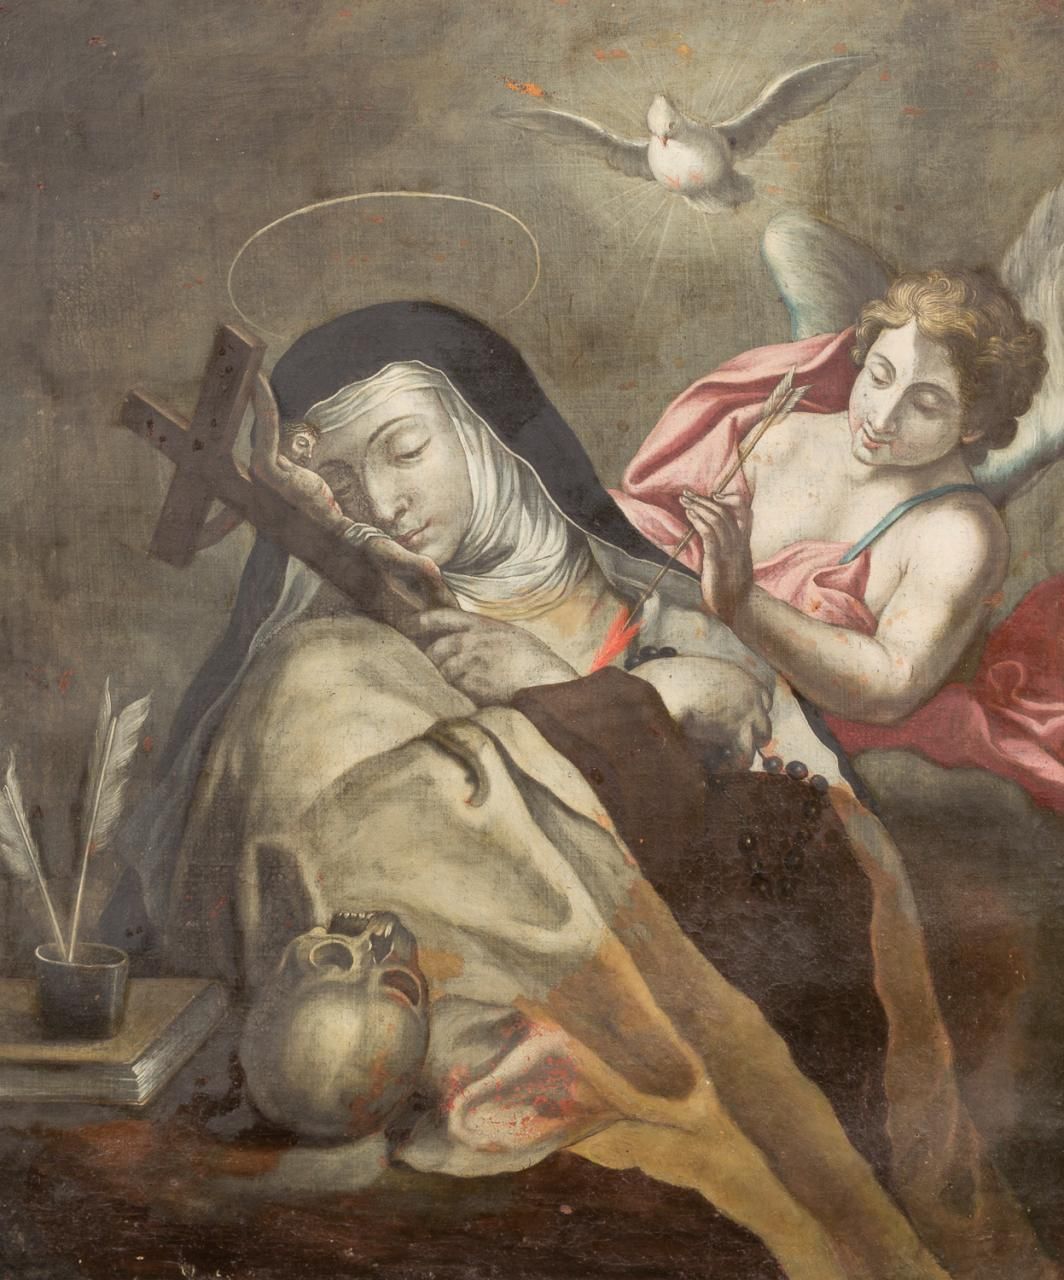 ESCUELA ITALIANA, S. XVII 圣特蕾莎的狂喜
布面油画
77 x 64 cm